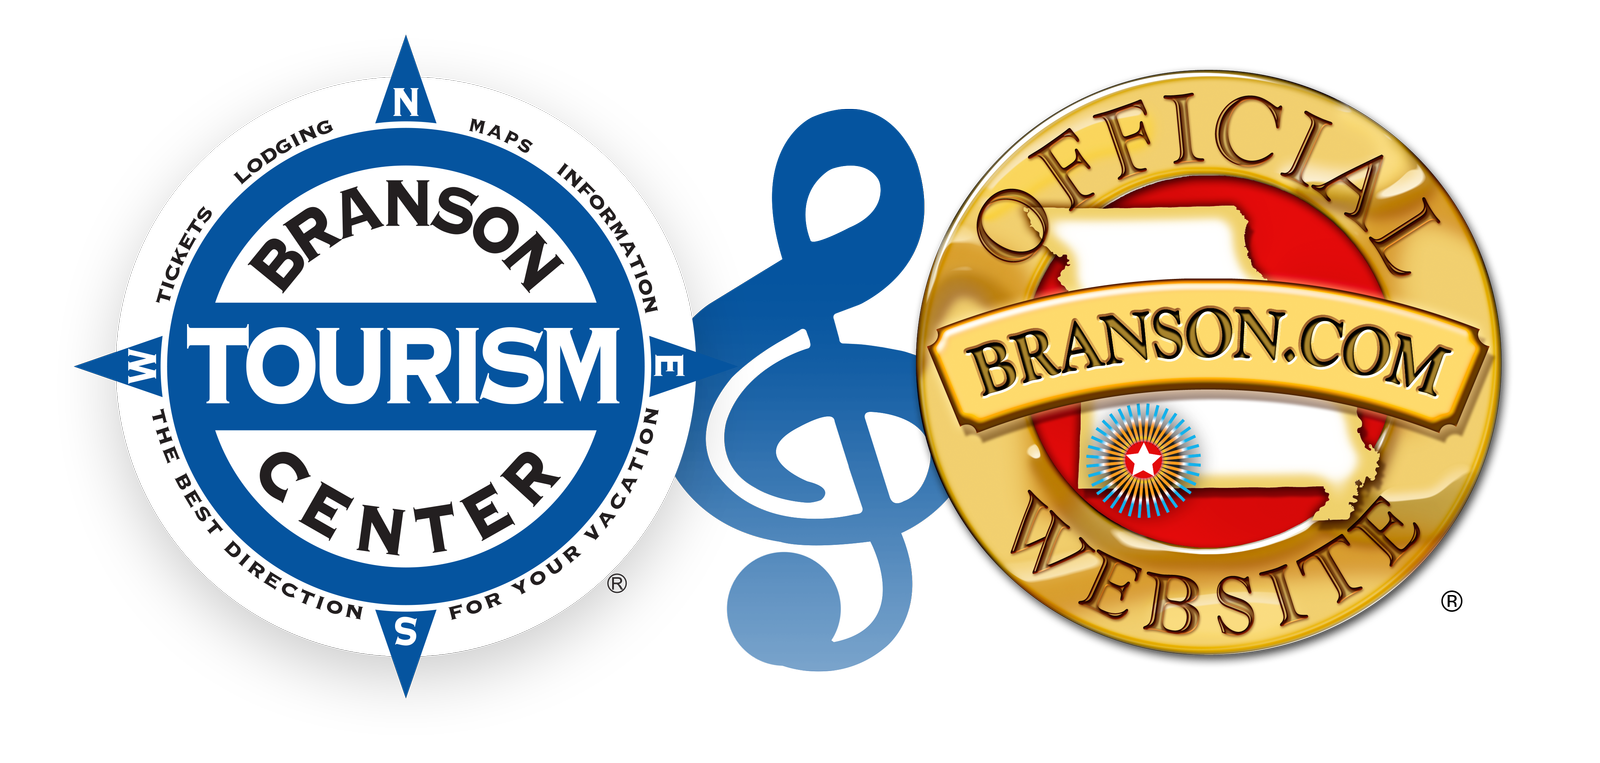 branson tourism center reviews